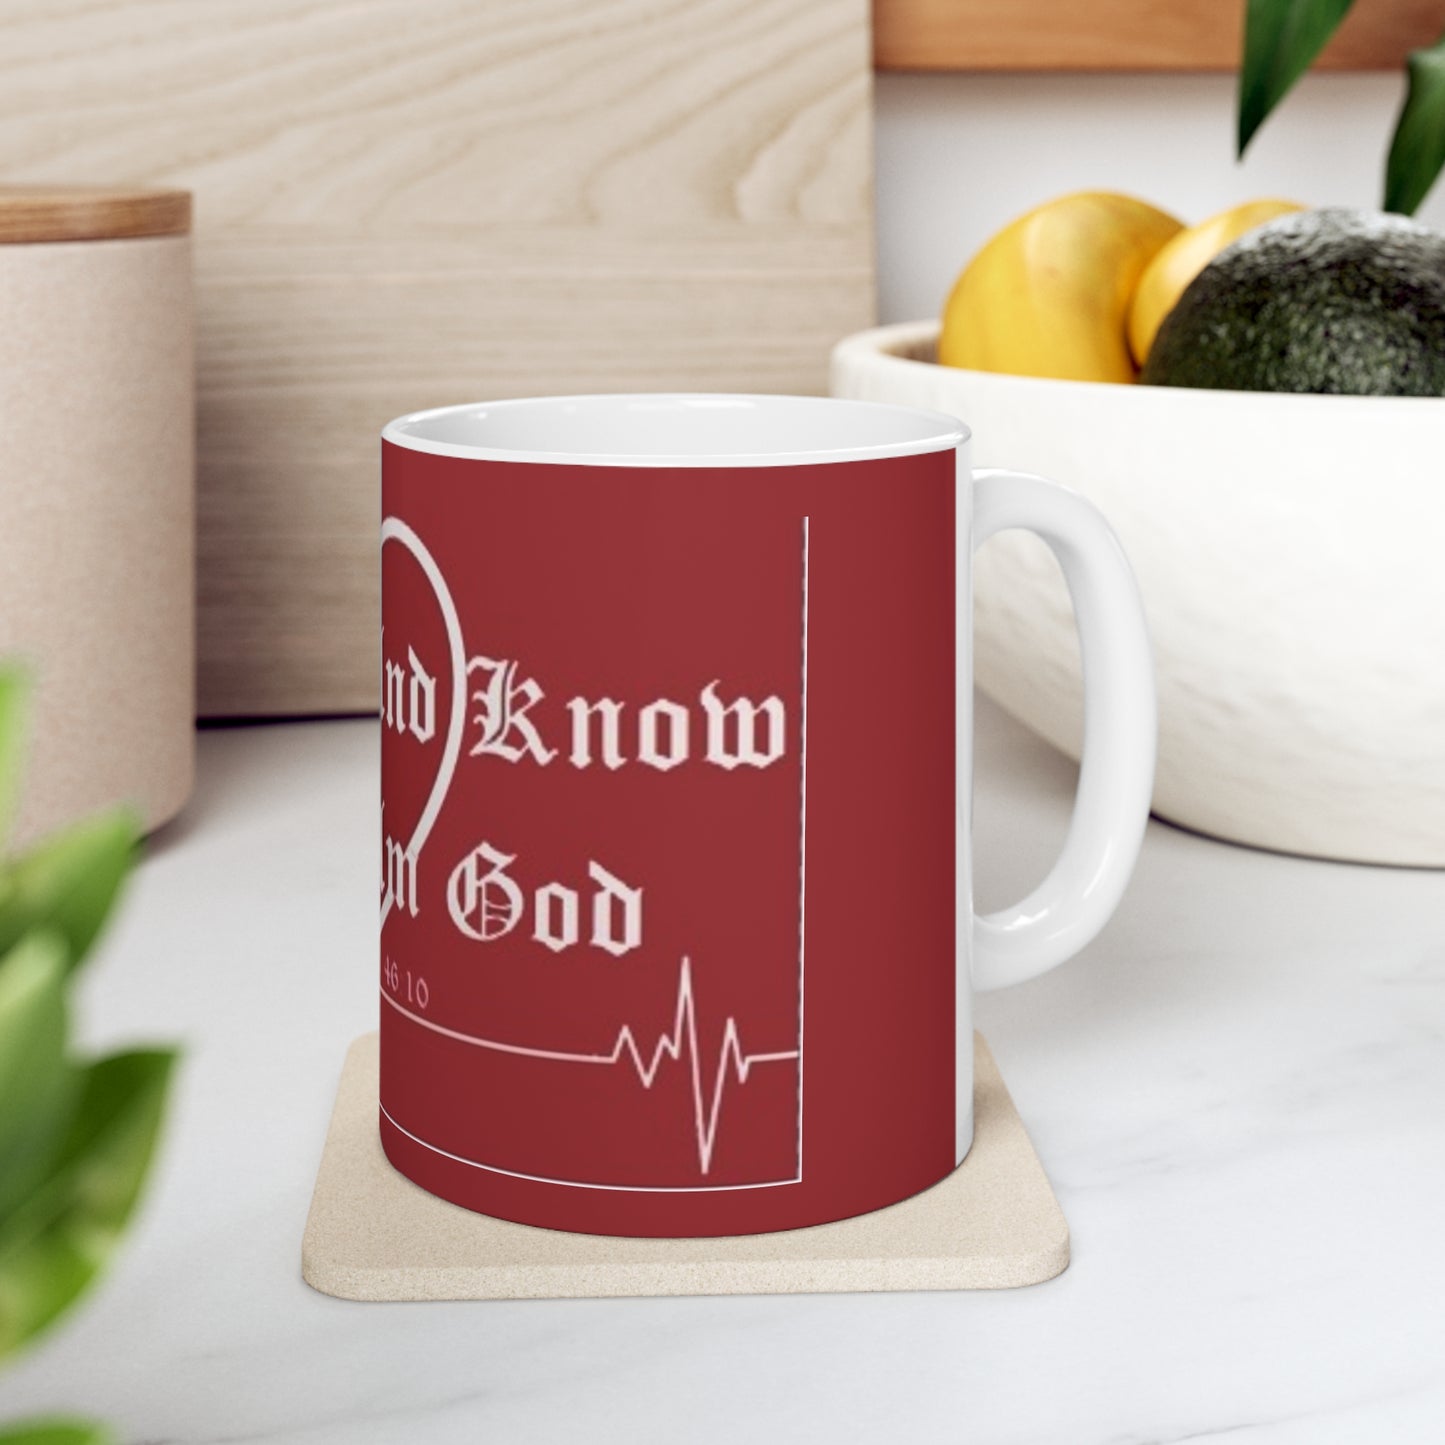 Psalms 46:10 "Be still, and know that I am God" Ceramic Mug 11oz